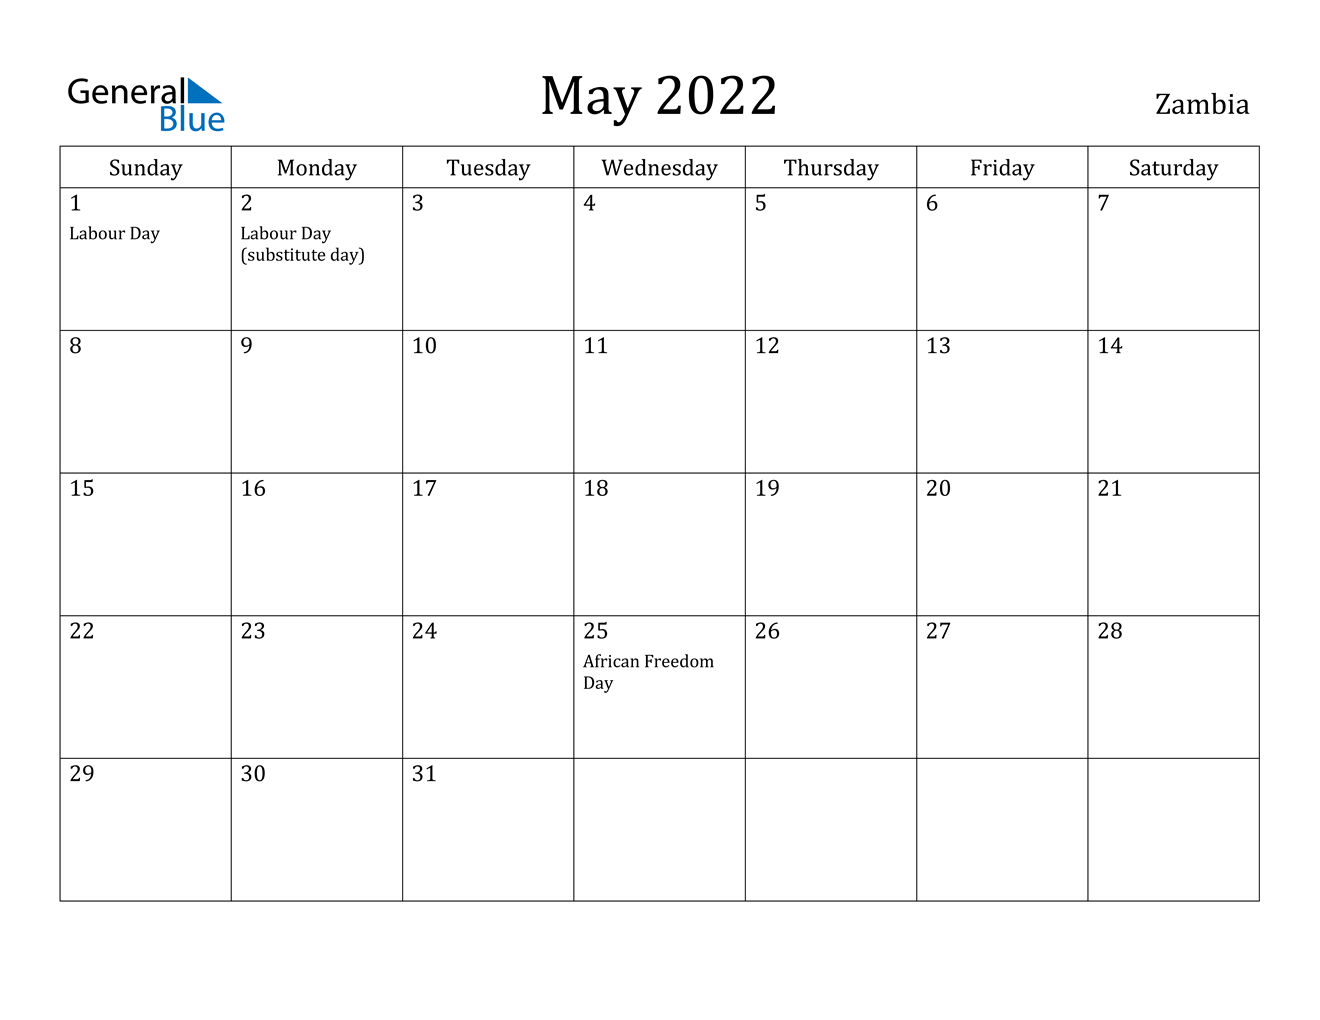 May 2022 Calendar - Zambia  Calendar 2022 Zambia Download